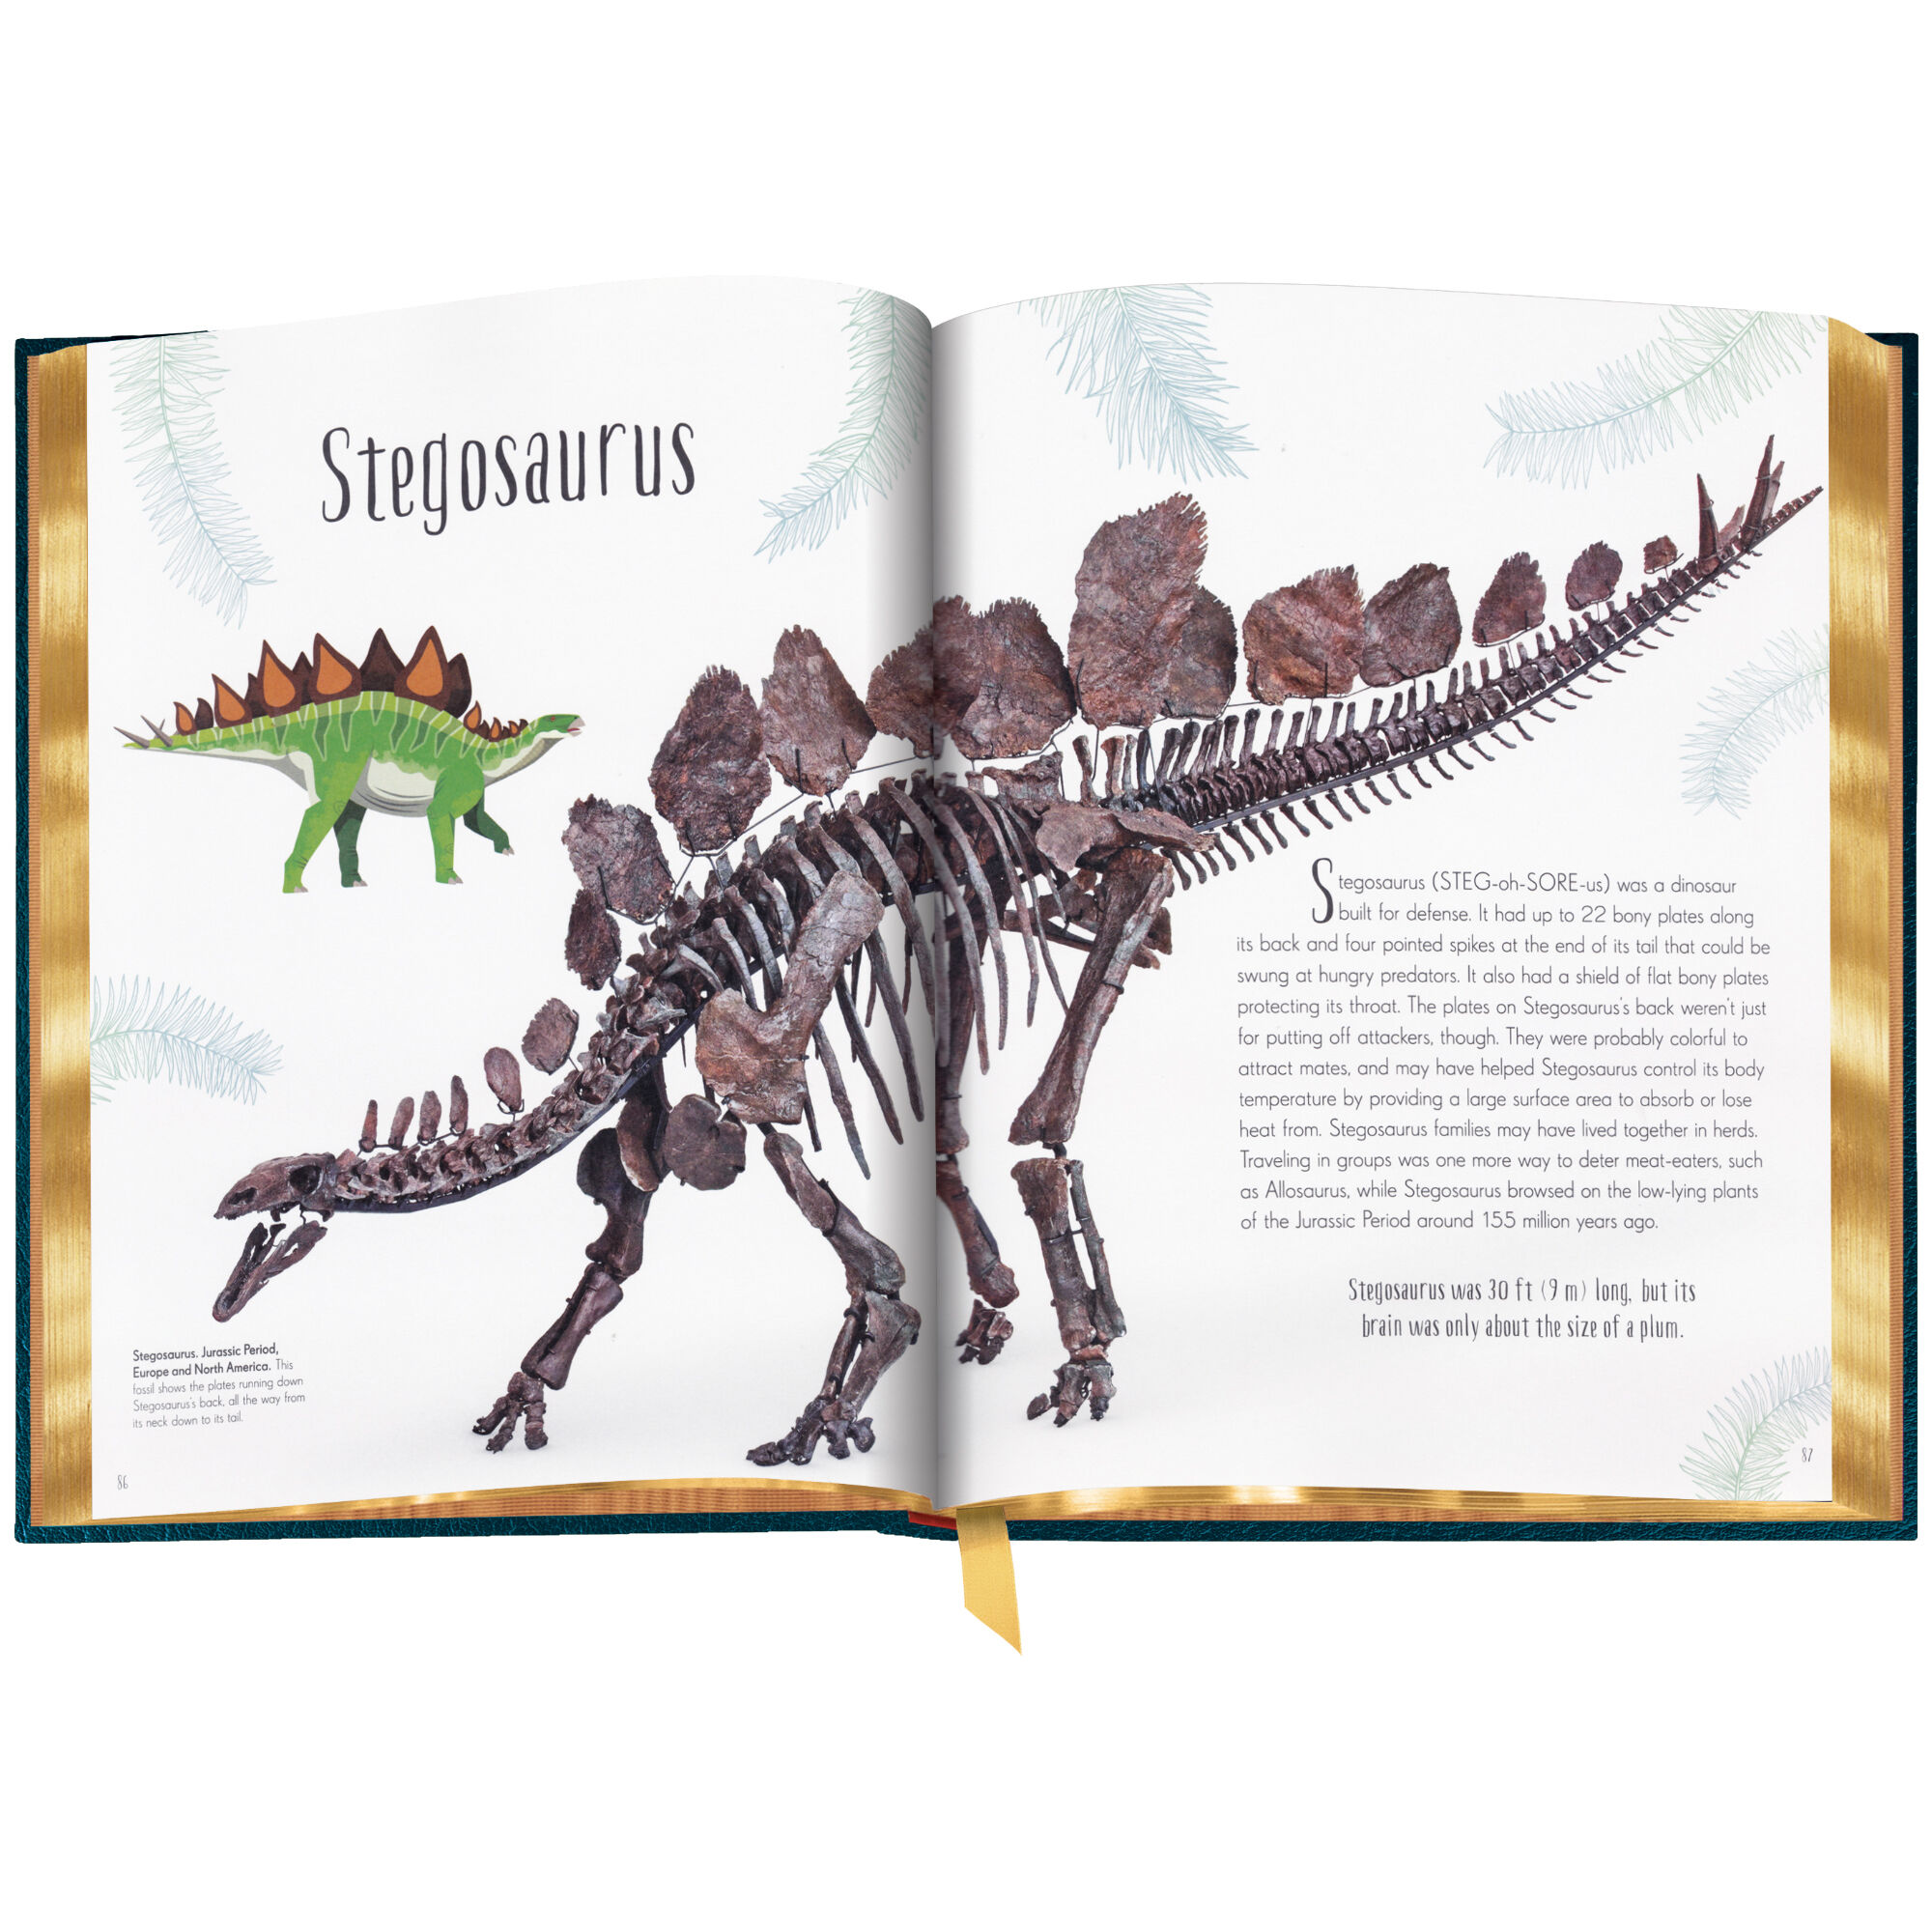 Dinosaurs Prehistoric Life 3790 d sp02